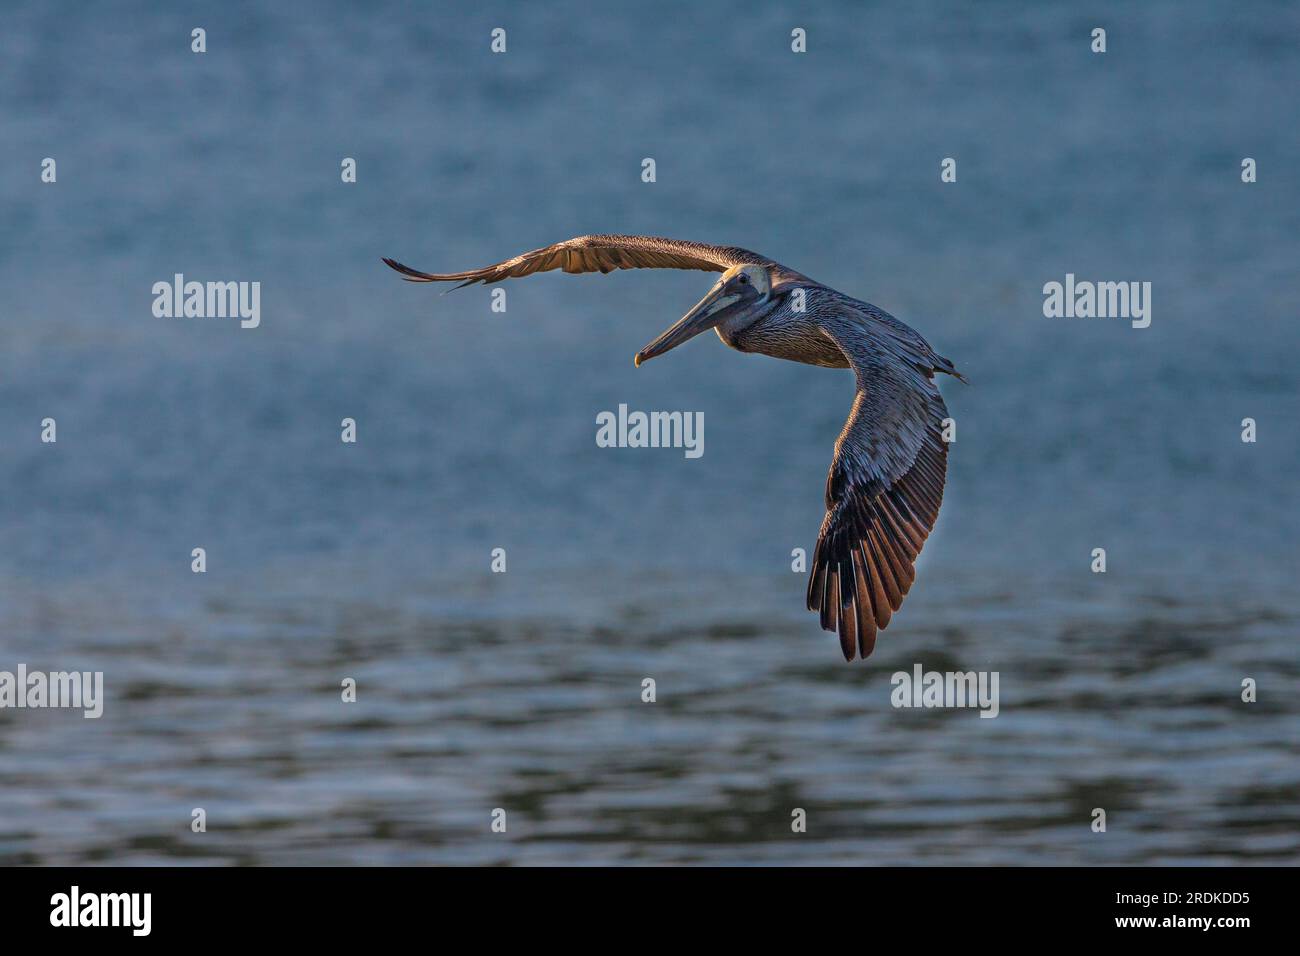 A brown pelican, Pelecanus occidentalis, in flight at the coast of Coiba Island, Pacific coast, Veraguas province, Republic of Panama, Central America Stock Photo